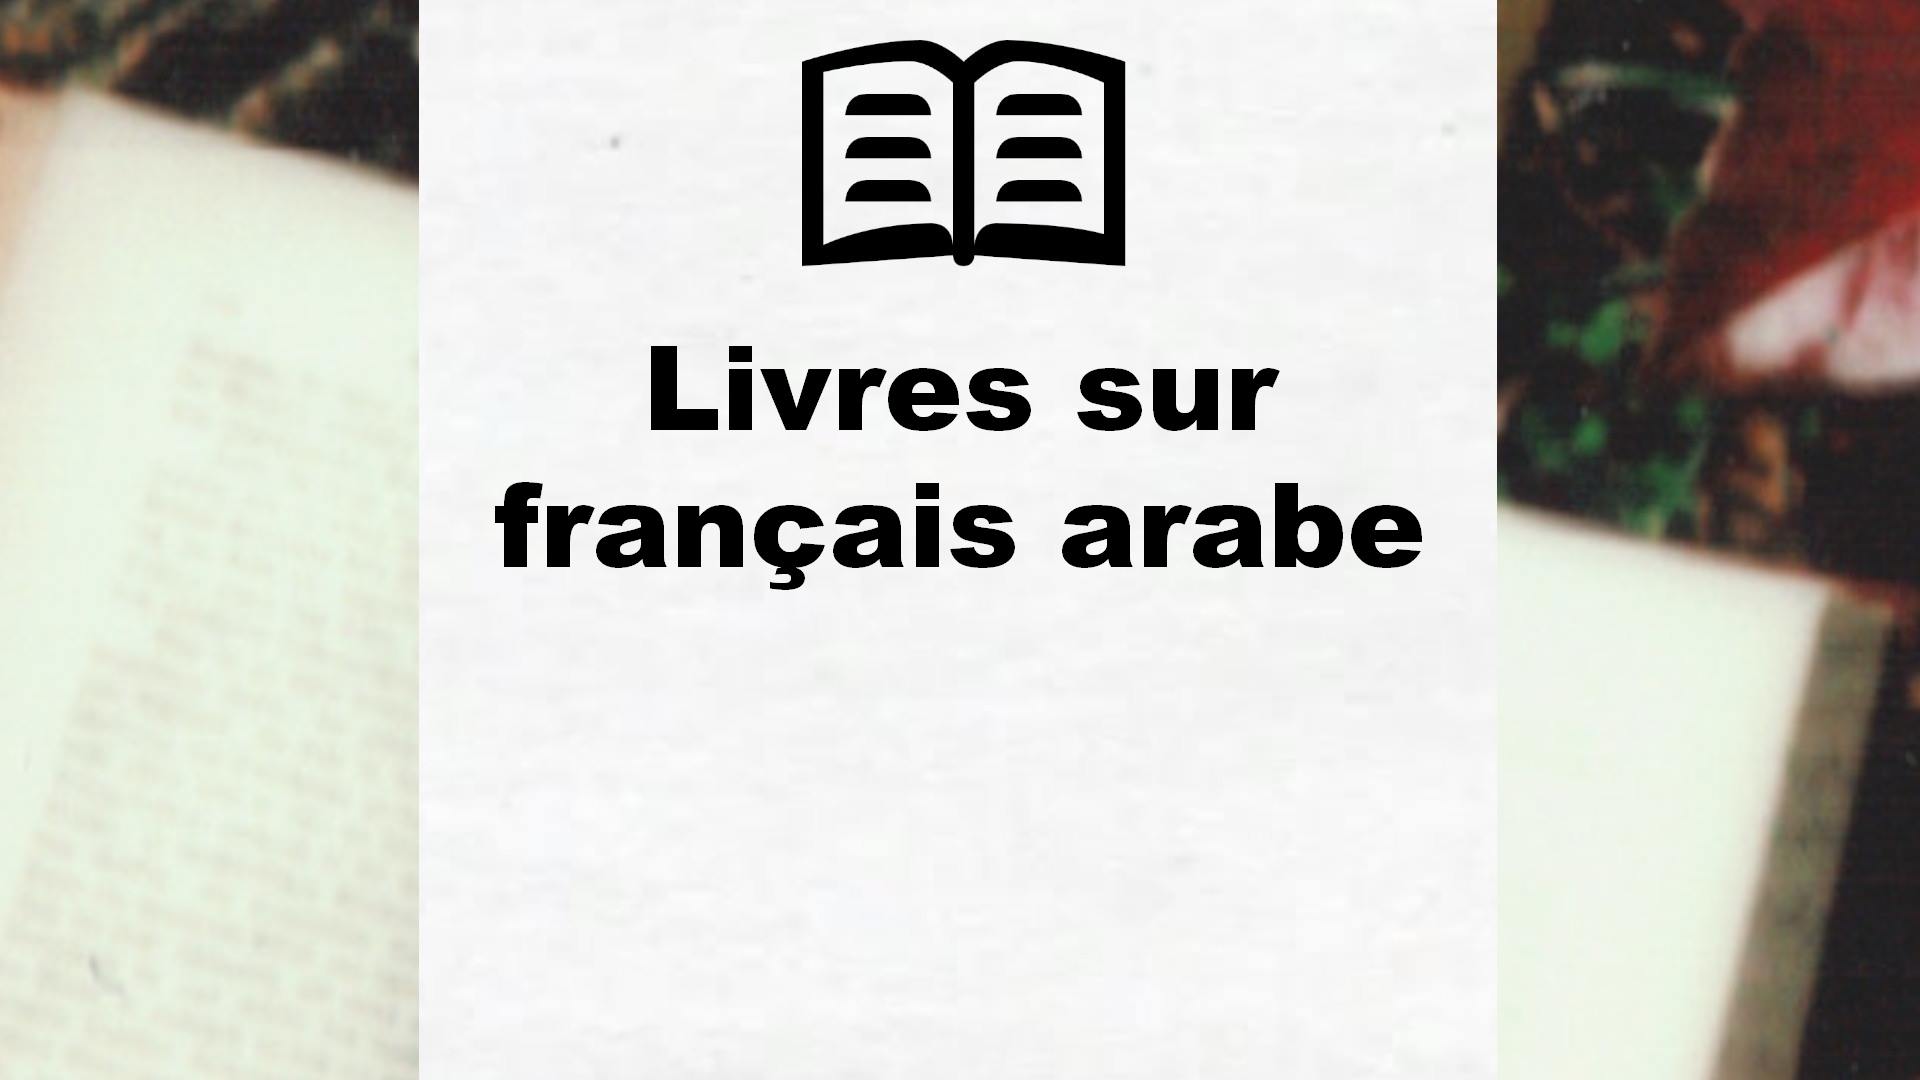 Livres sur français arabe